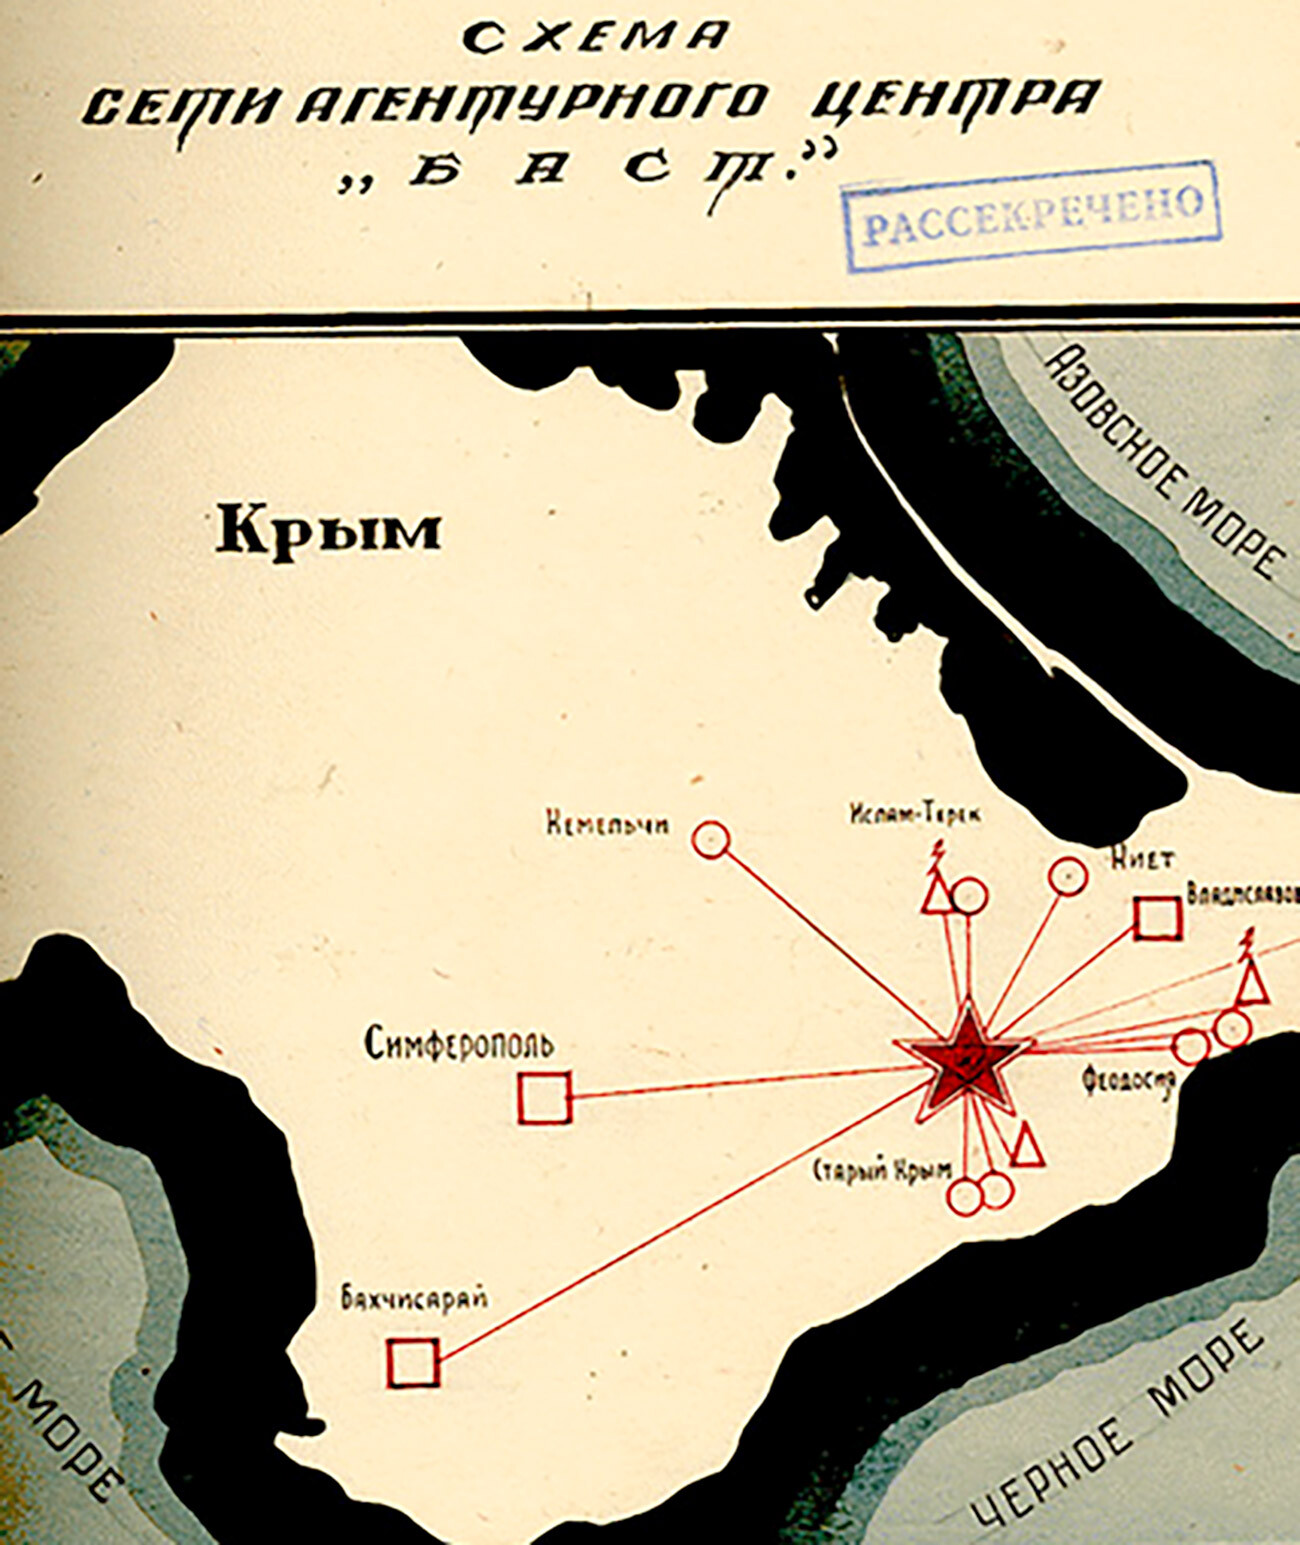 Приказ мреже агентурног центра „Баст“ на Криму, 1943-1944.